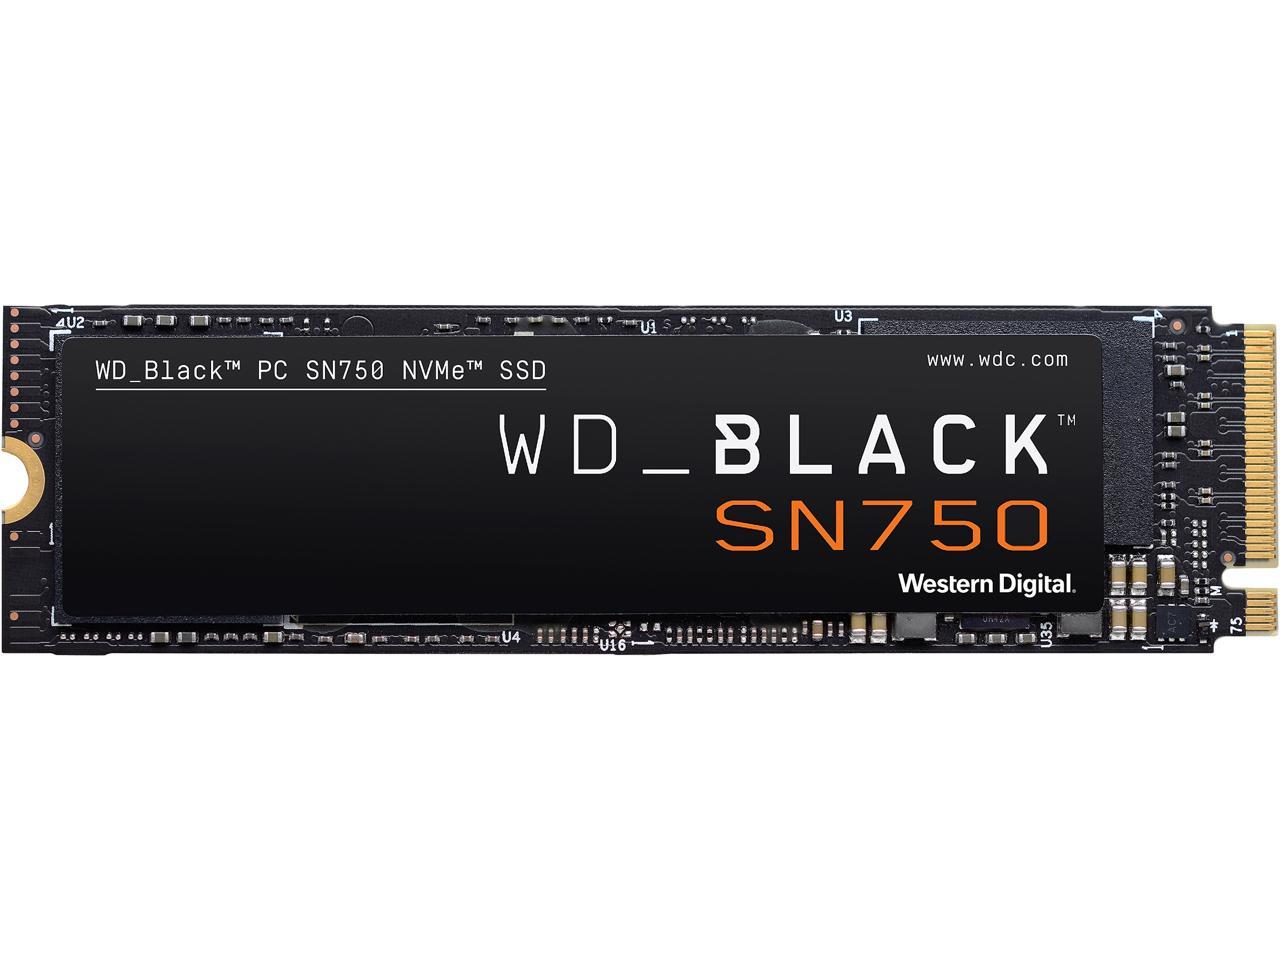 500GB Western Digital WD Black SN750 NVMe M.2 2280 Solid State Drive SSD $62.99 AC + Free Shipping via Newegg